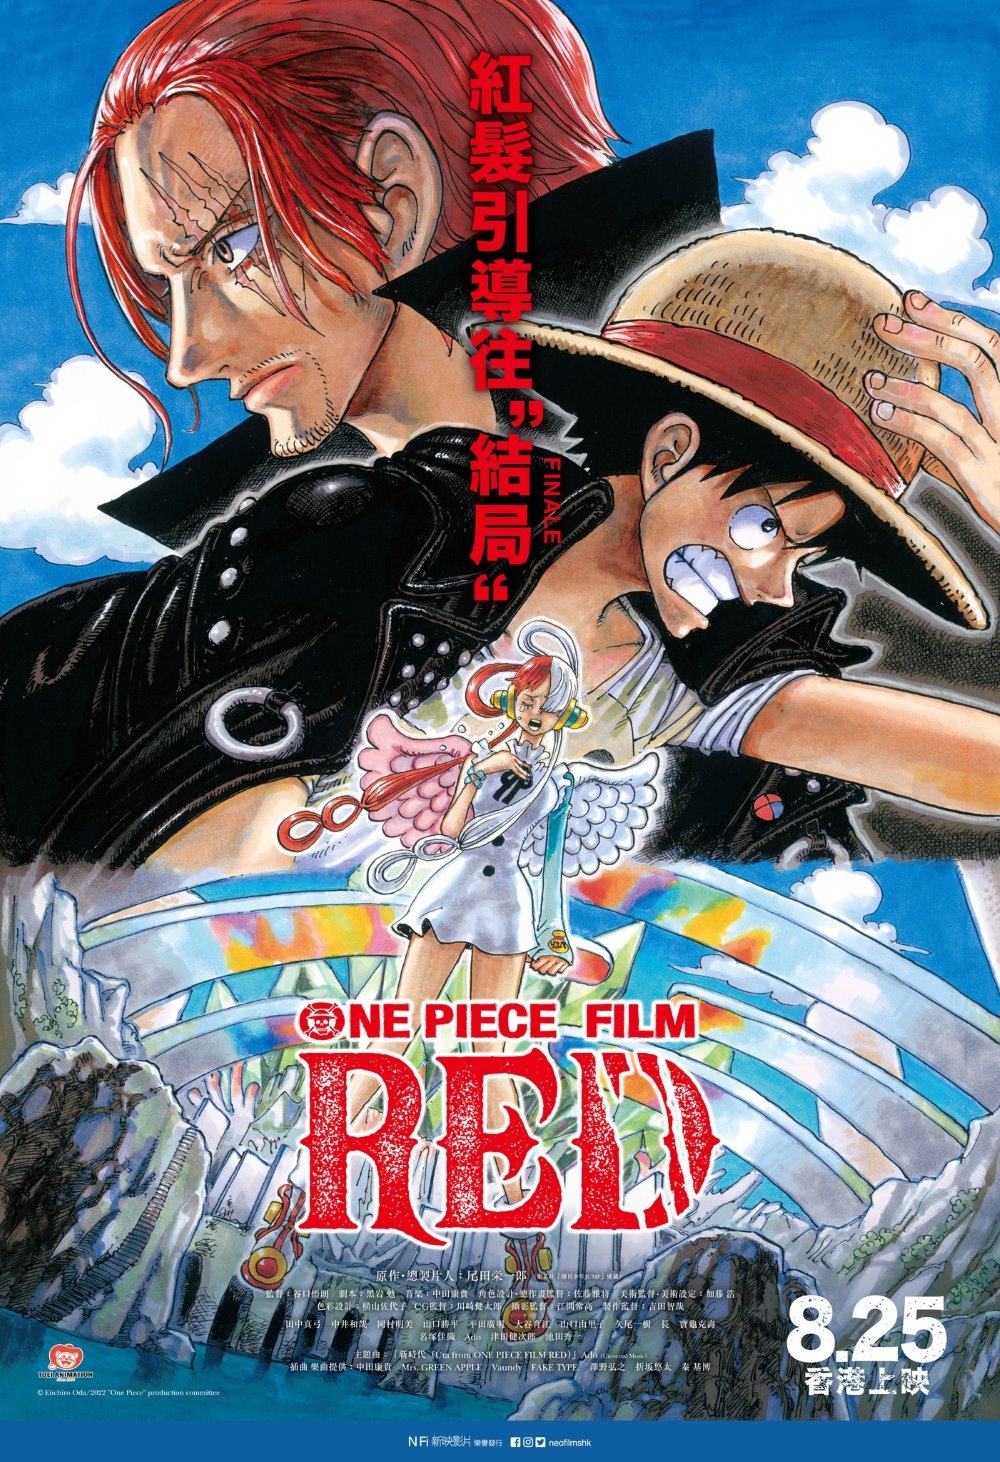 One Piece Film Red (4DX 日語版)電影圖片 - poster_1657457737.jpg